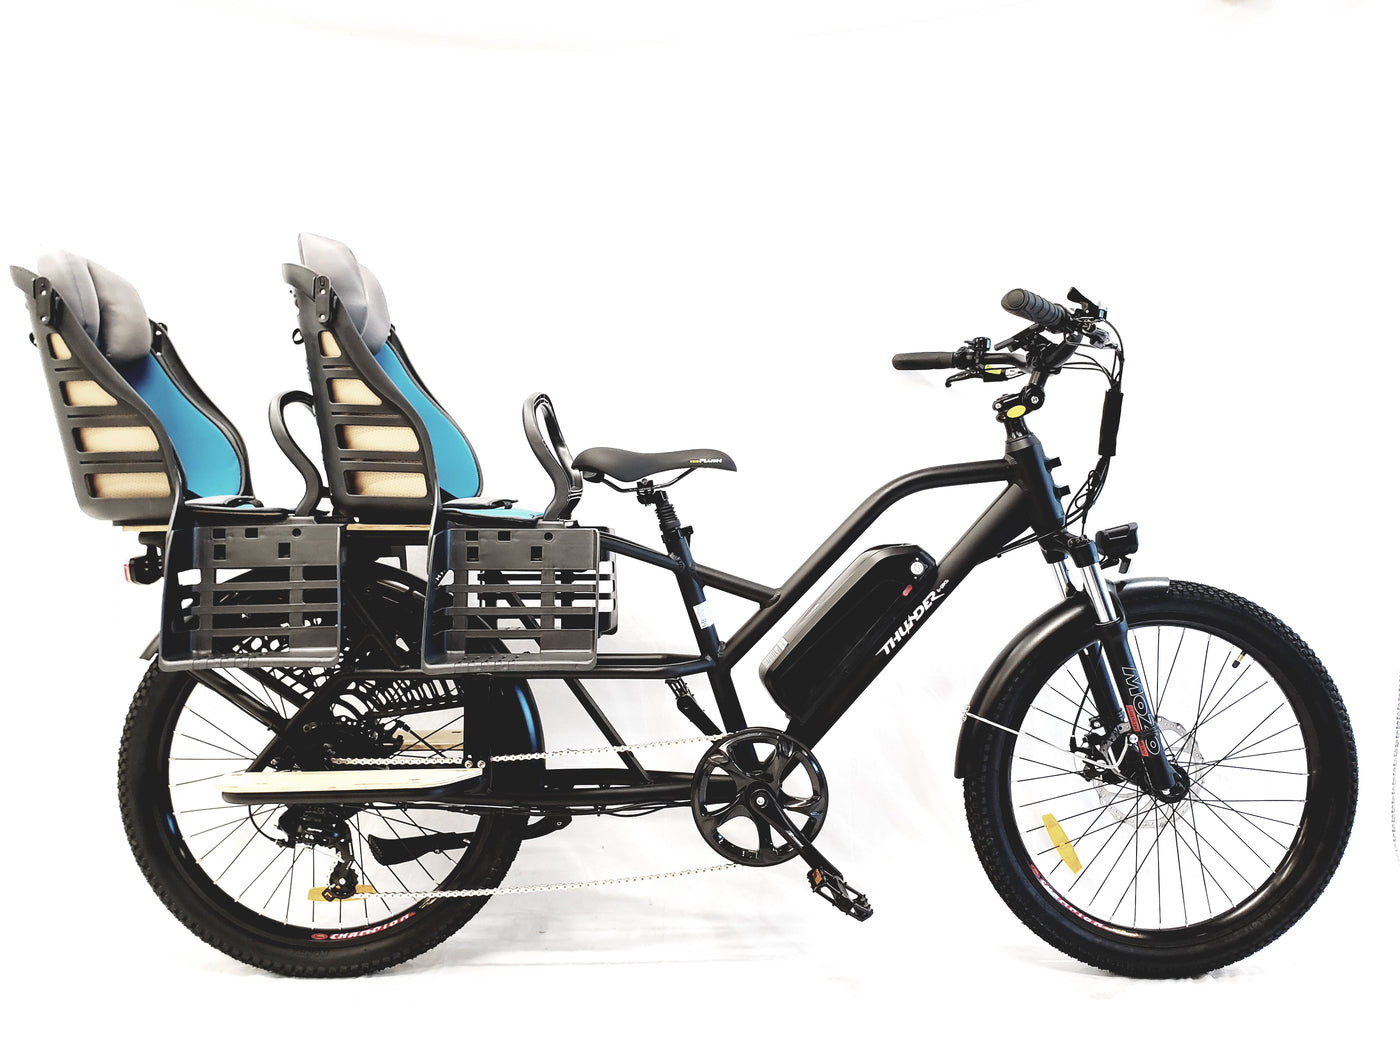 Toddler Bike seat - Cargo bike style